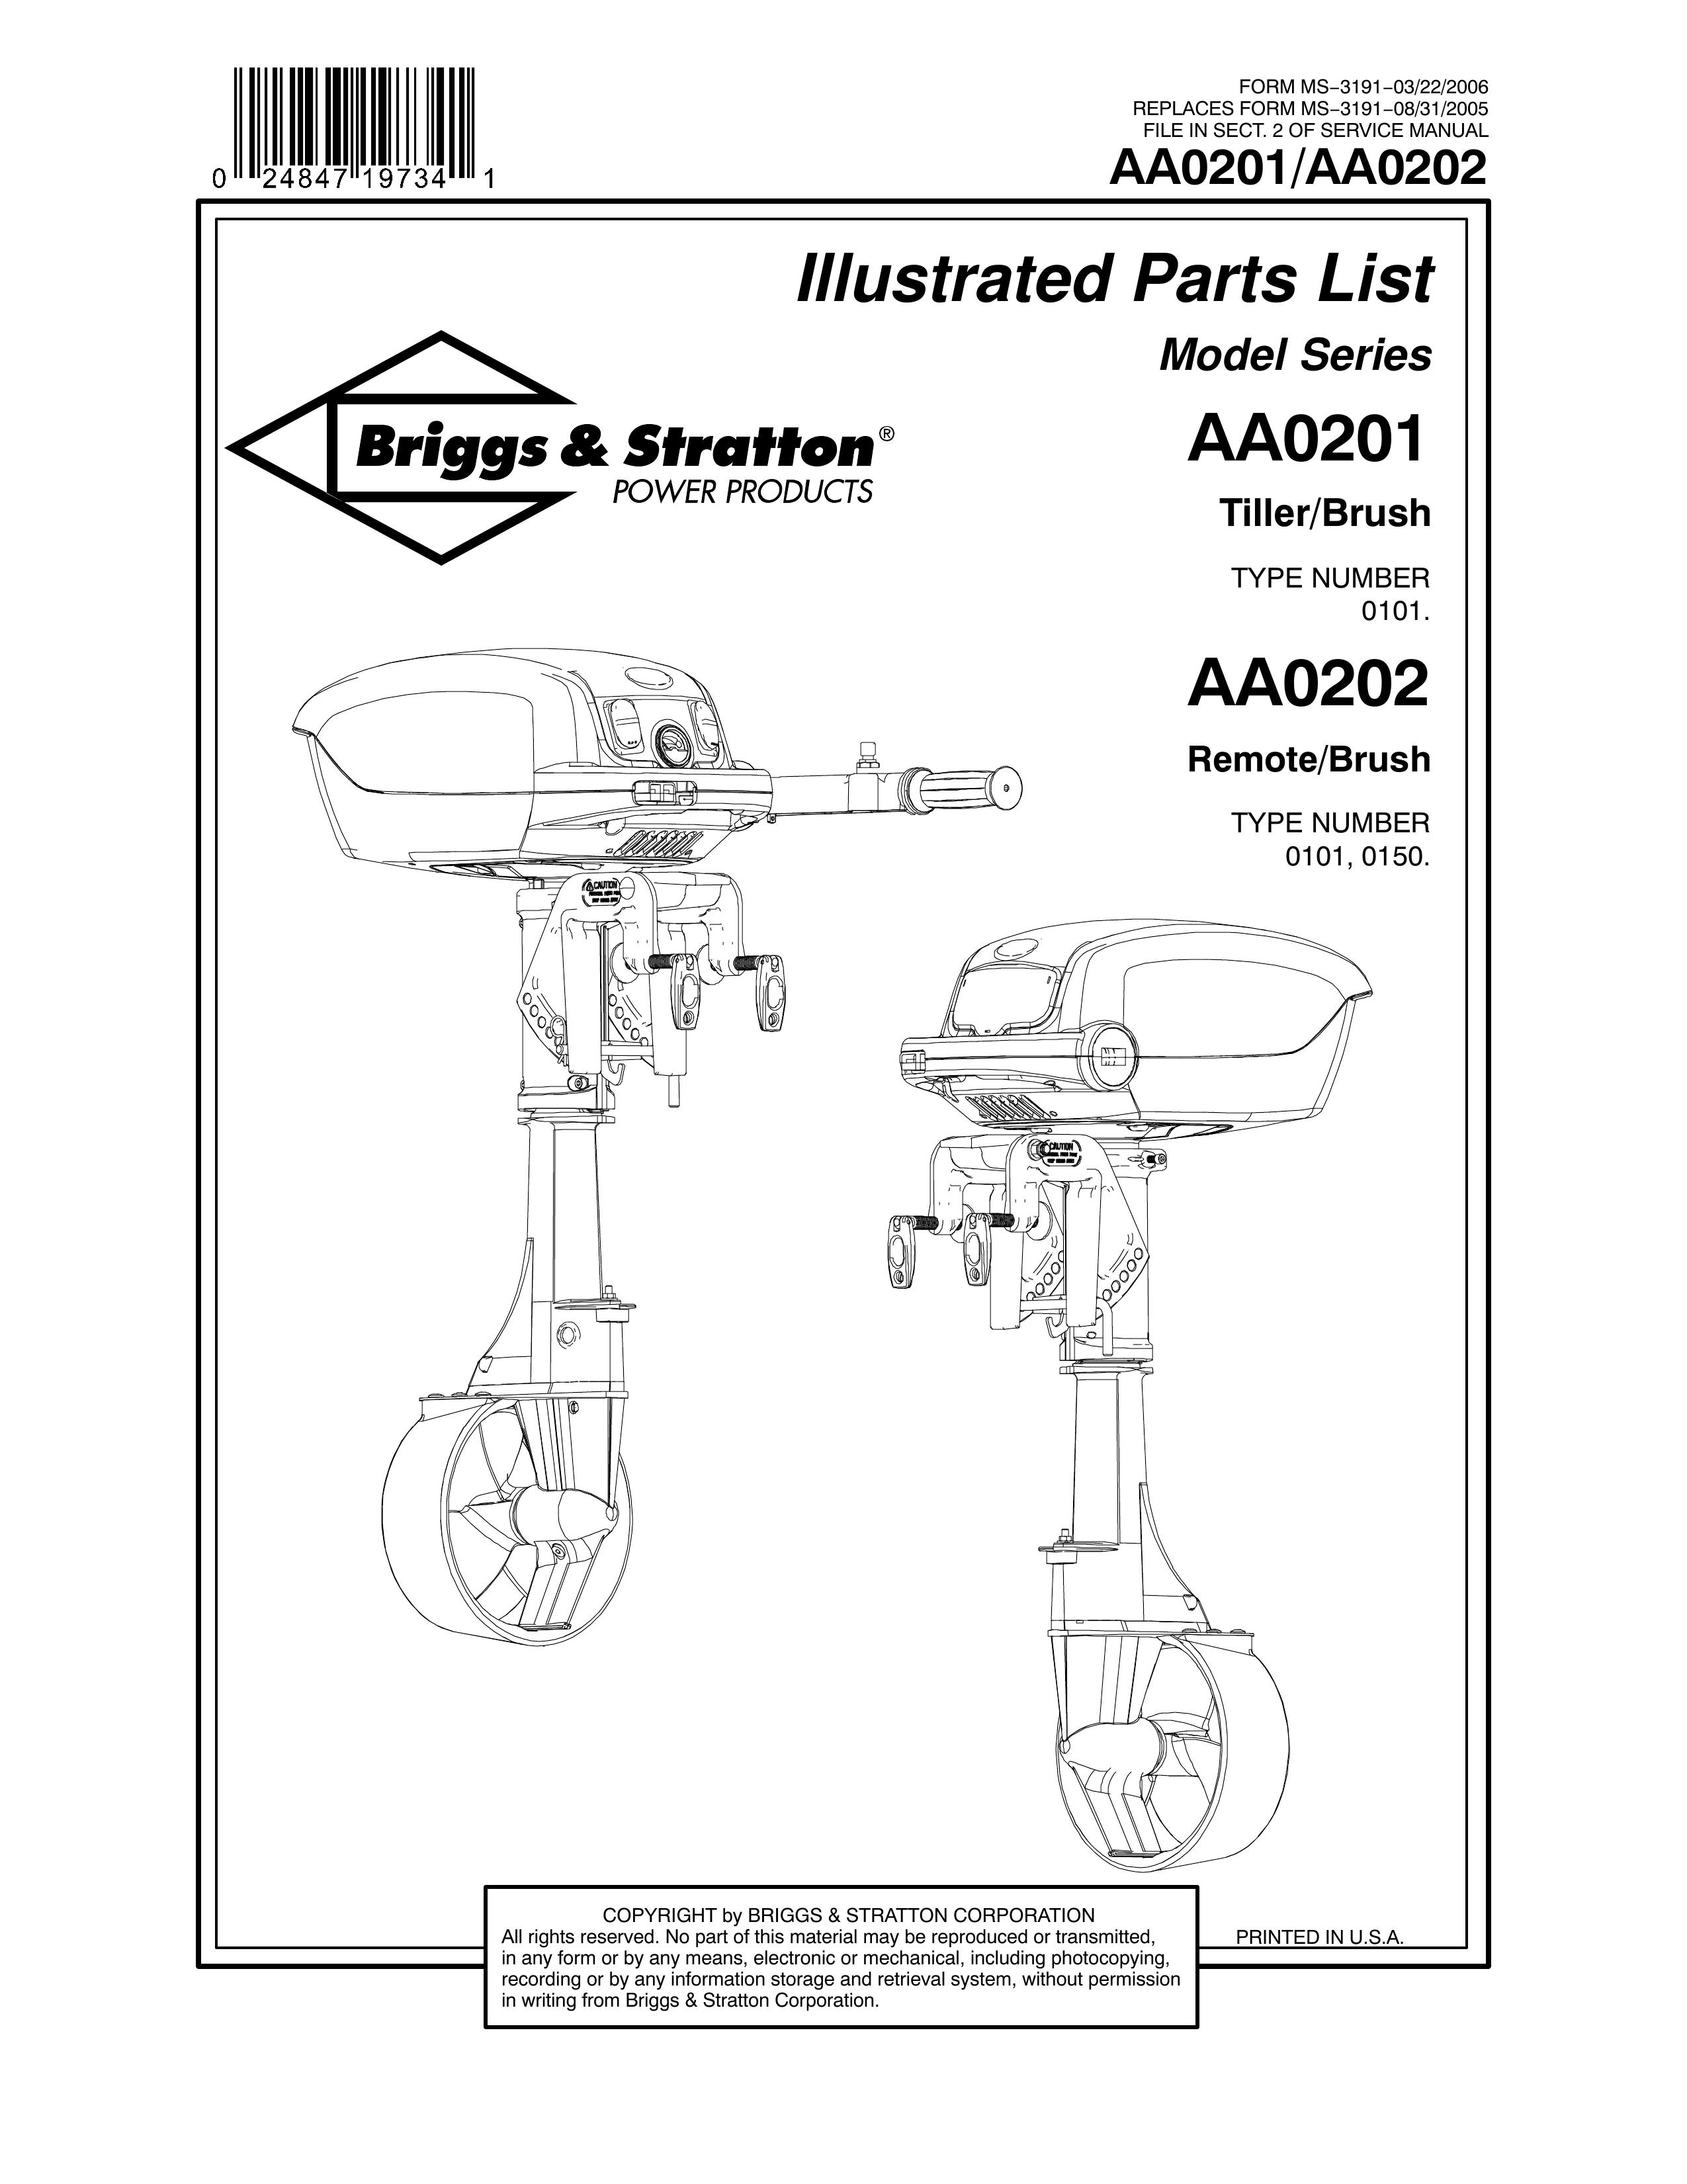 Briggs & Stratton AA0201 Tiller User Manual